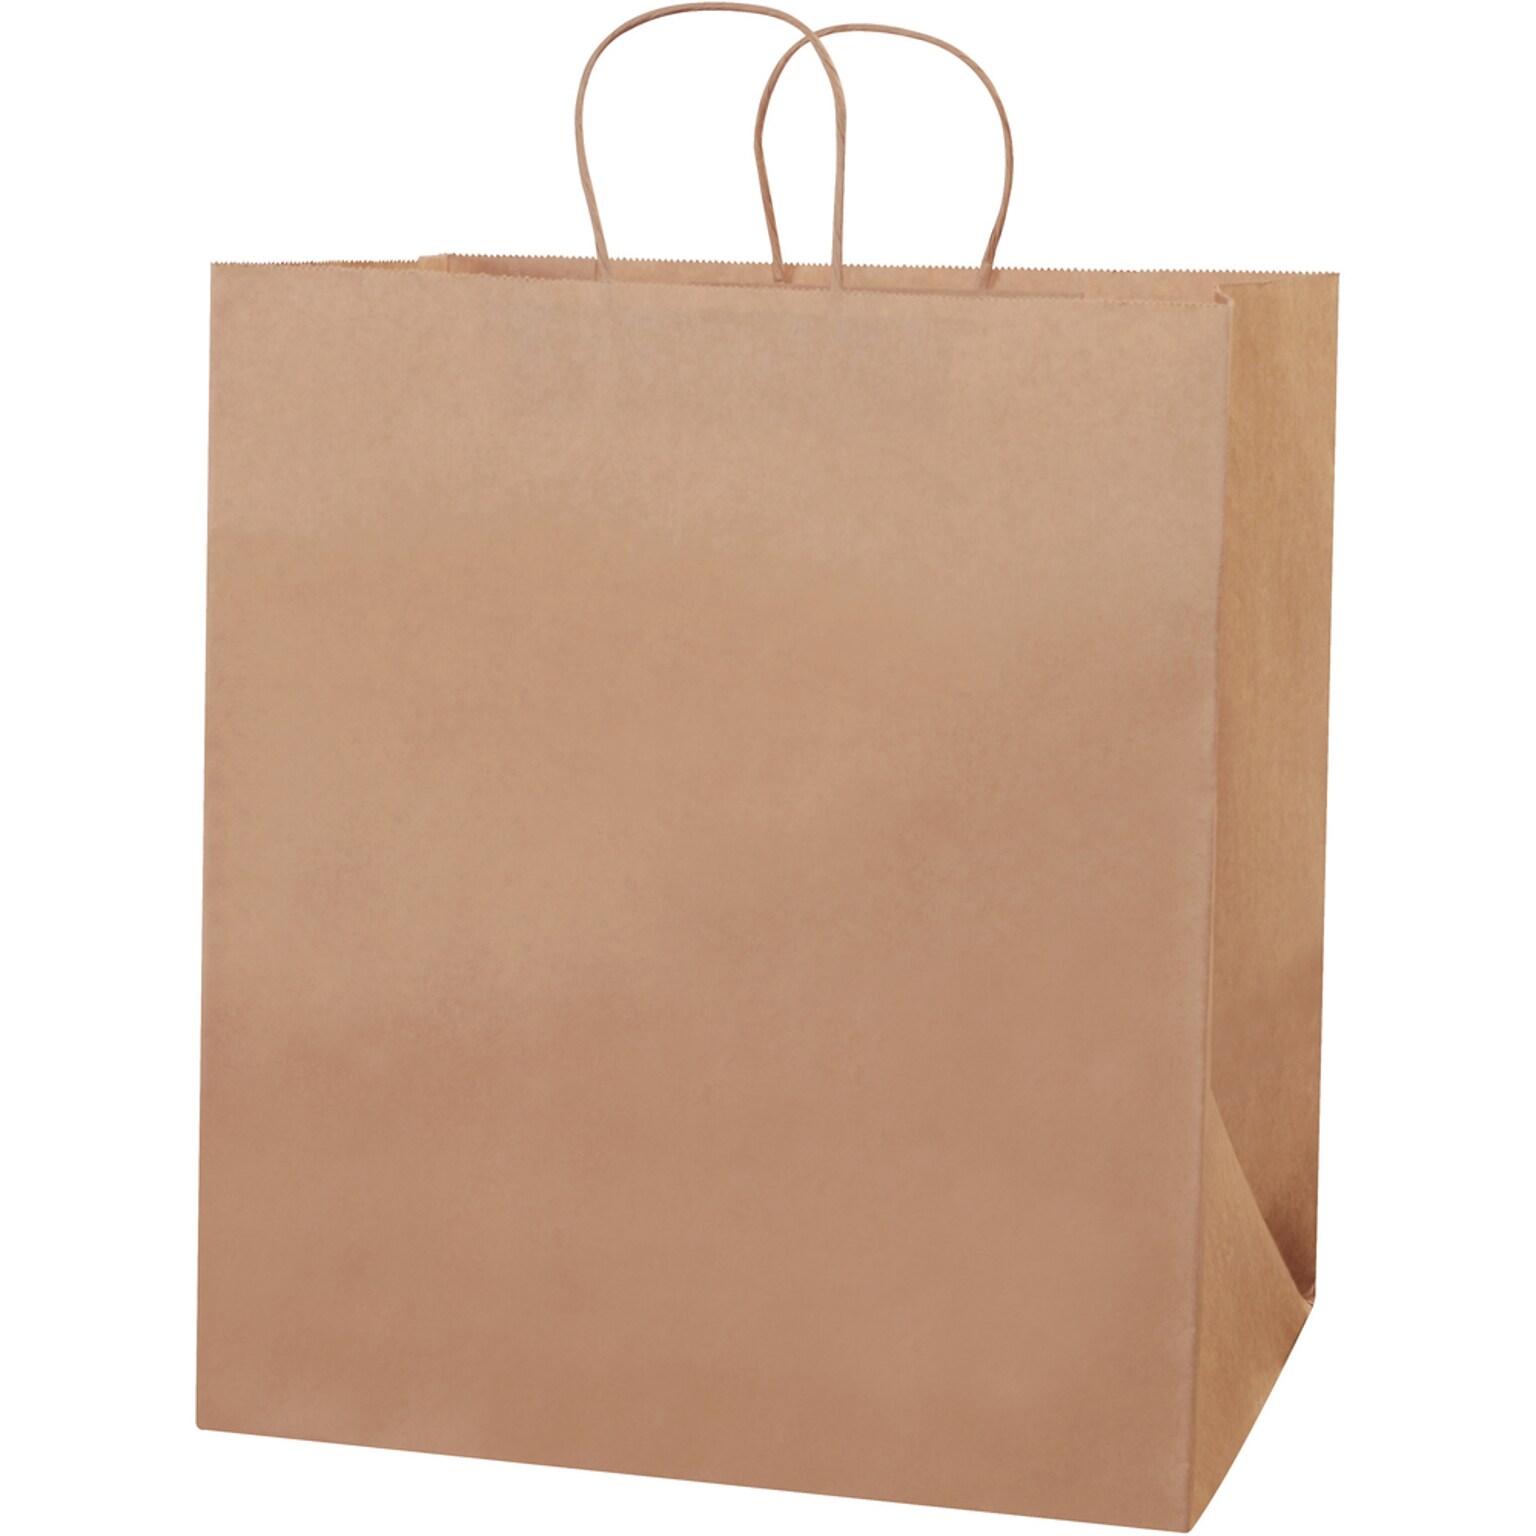 Staples 14 x 10 x 15 1/2 Shopping Bags, Kraft, 200/Carton (BGS107K)